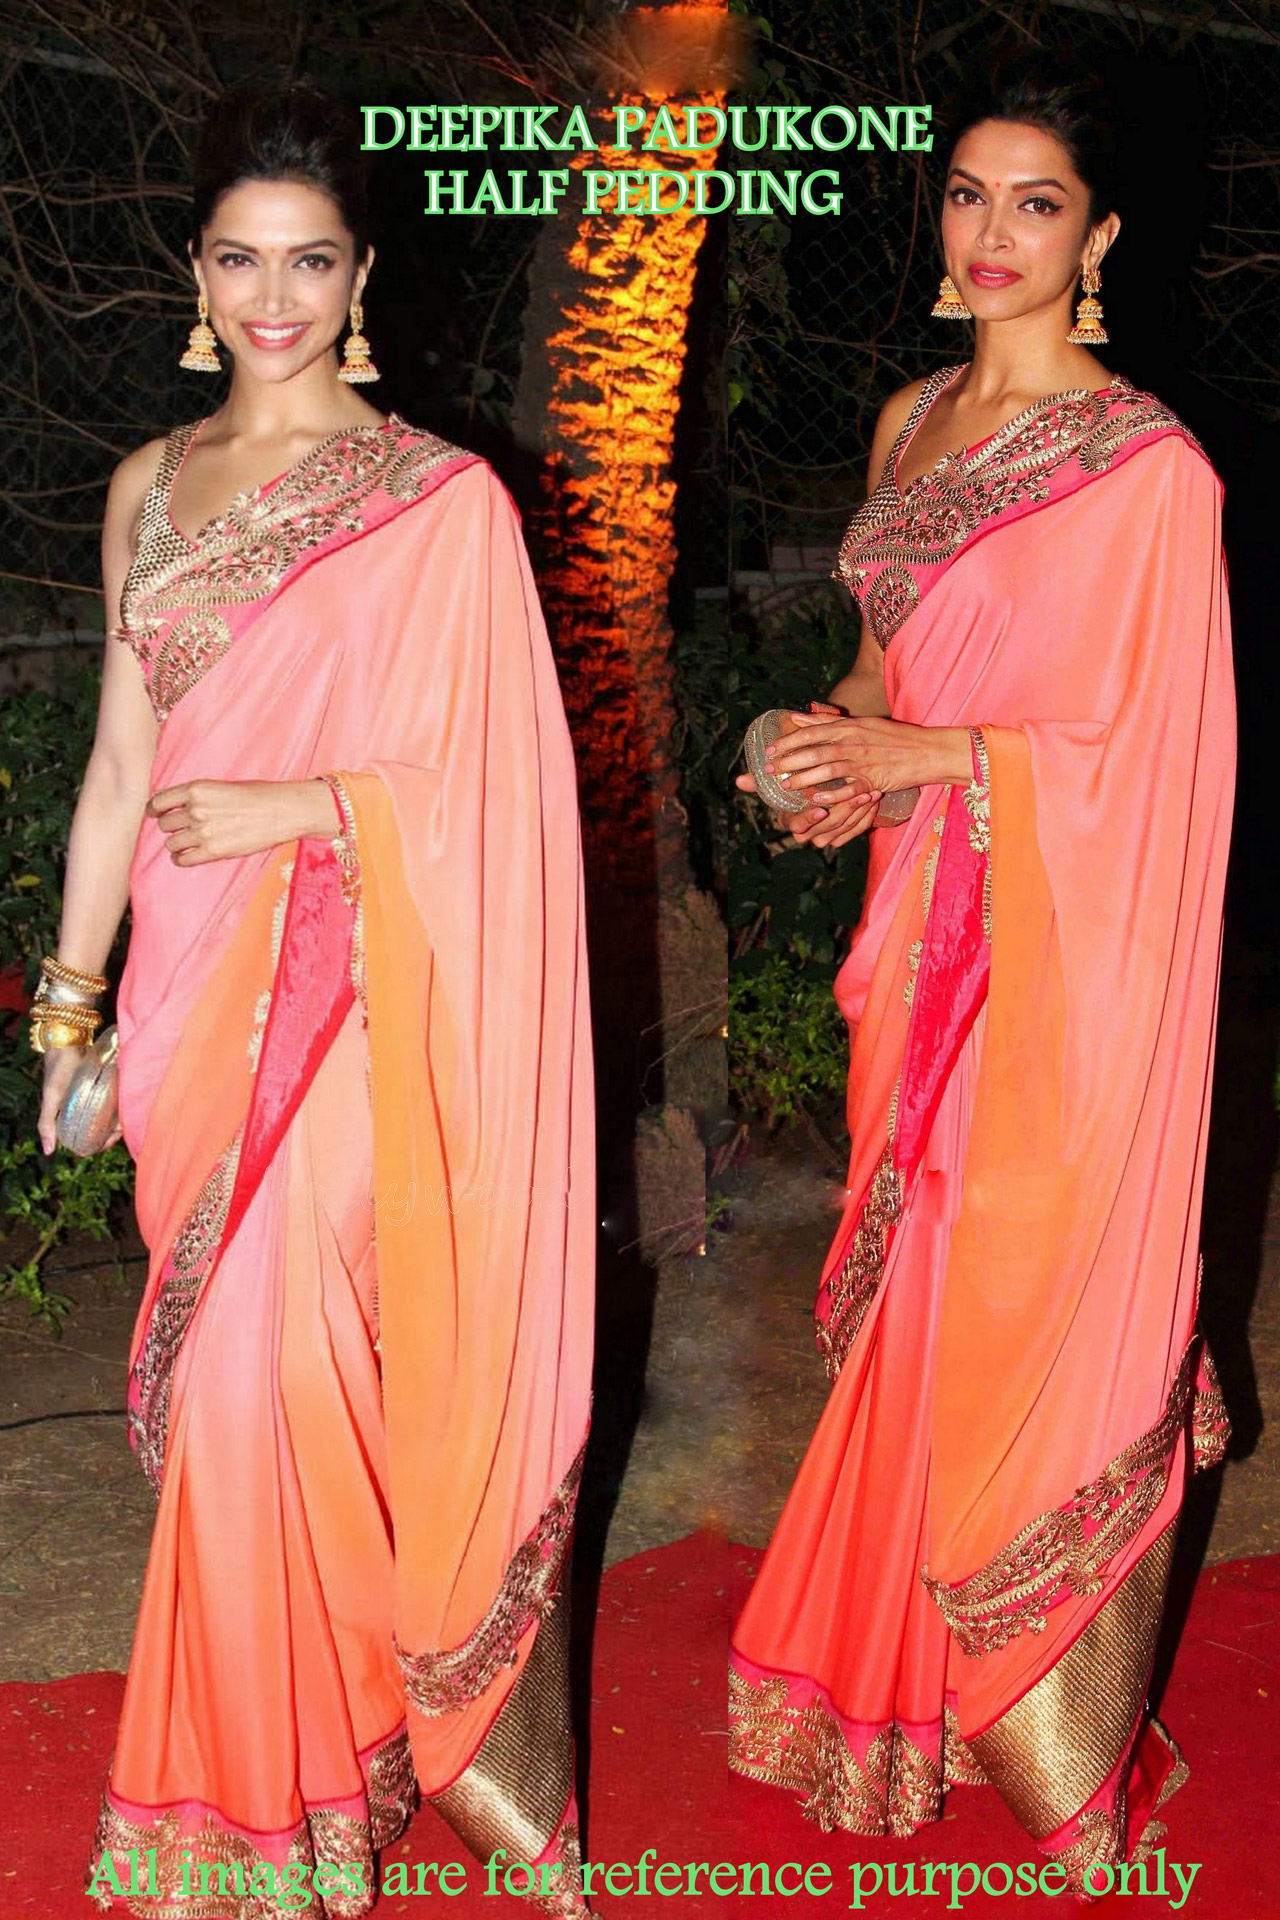 Deepika Padukone in an orange outfit | Page 4 | Telugu Cinema